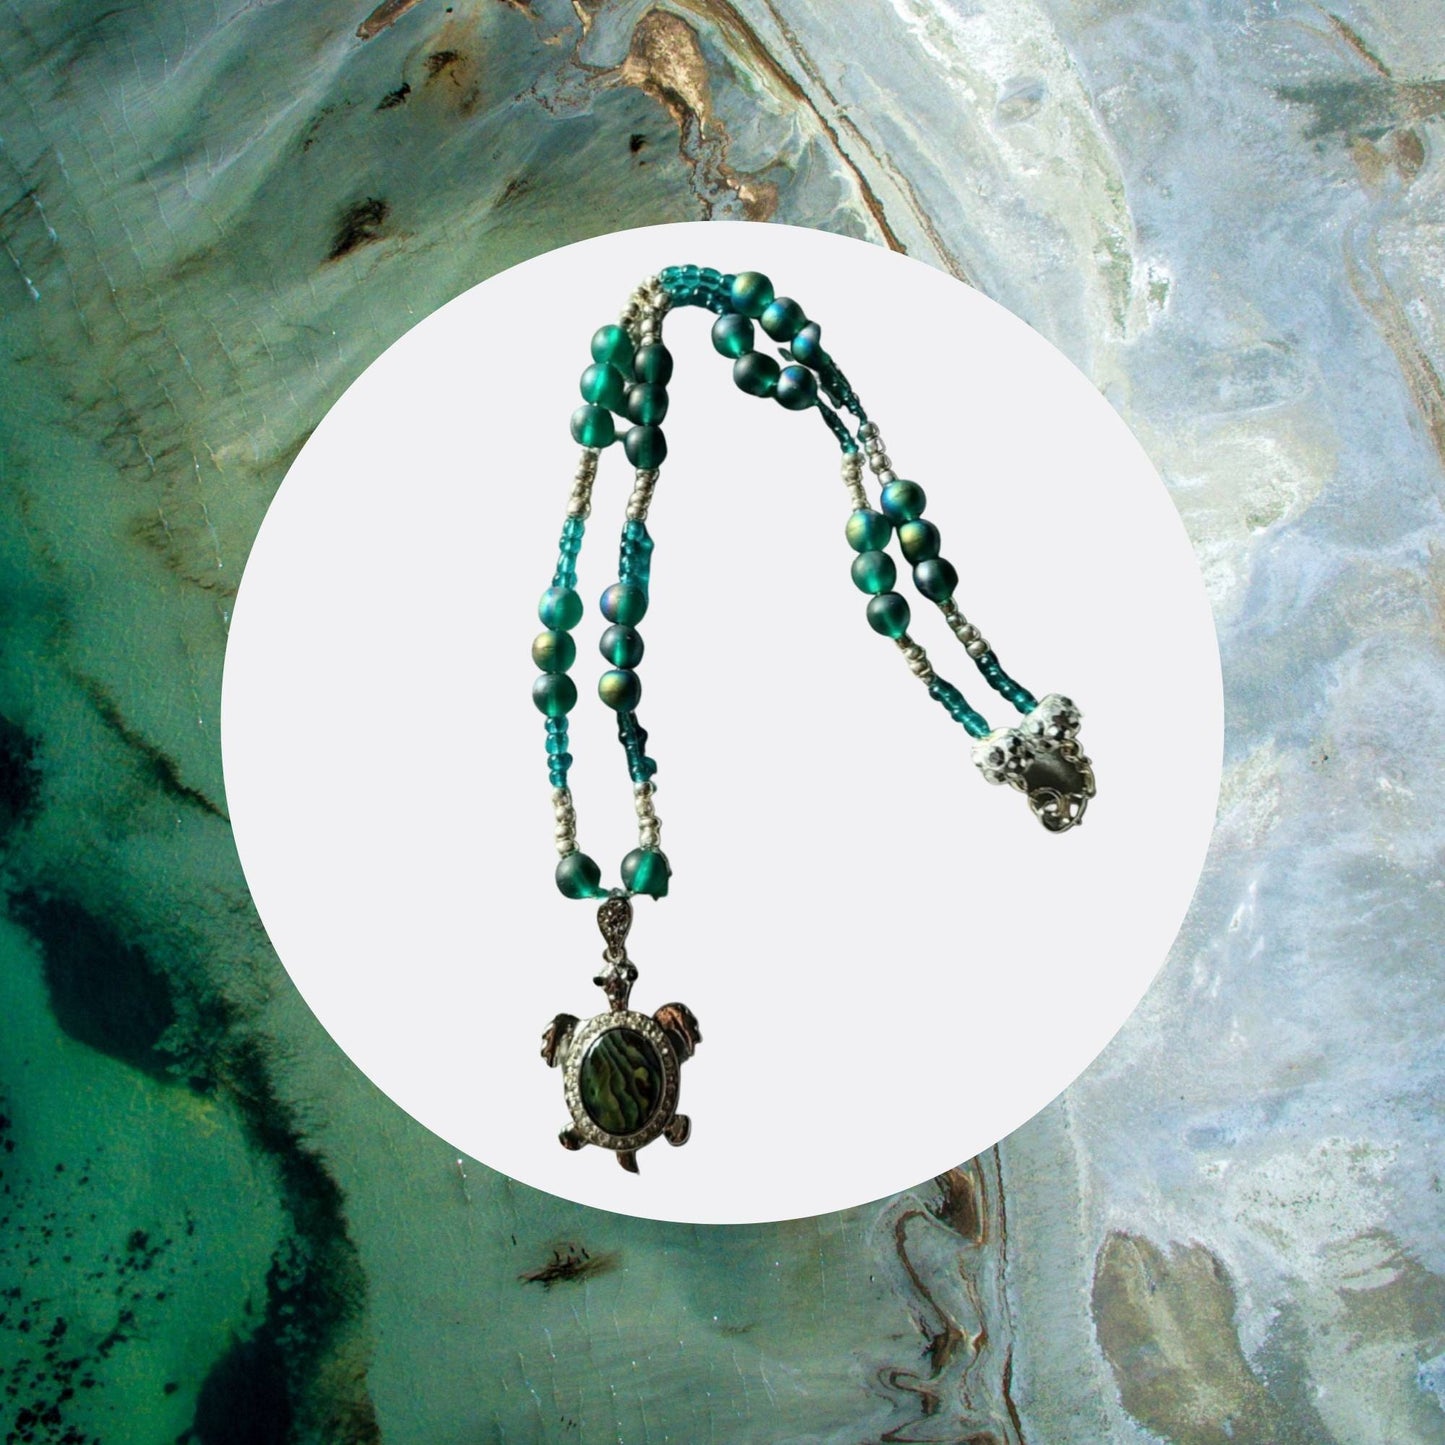 Green Turtle Pendant Bead Necklace & Earring Set